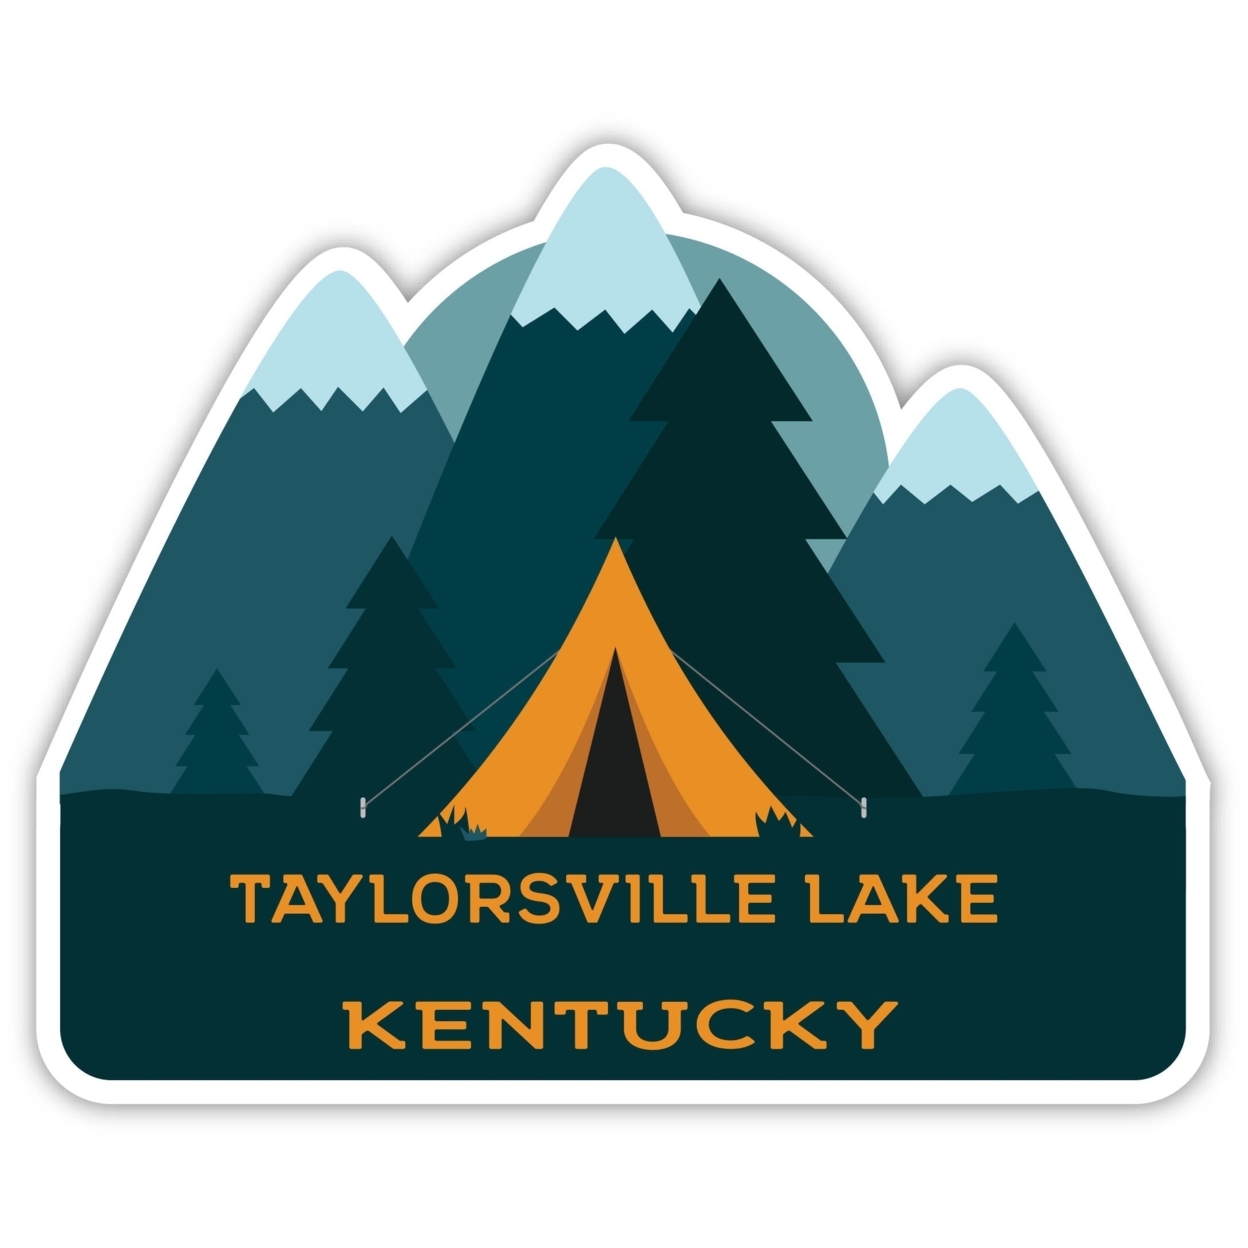 Taylorsville Lake Kentucky Souvenir Decorative Stickers (Choose Theme And Size) - Single Unit, 4-Inch, Tent